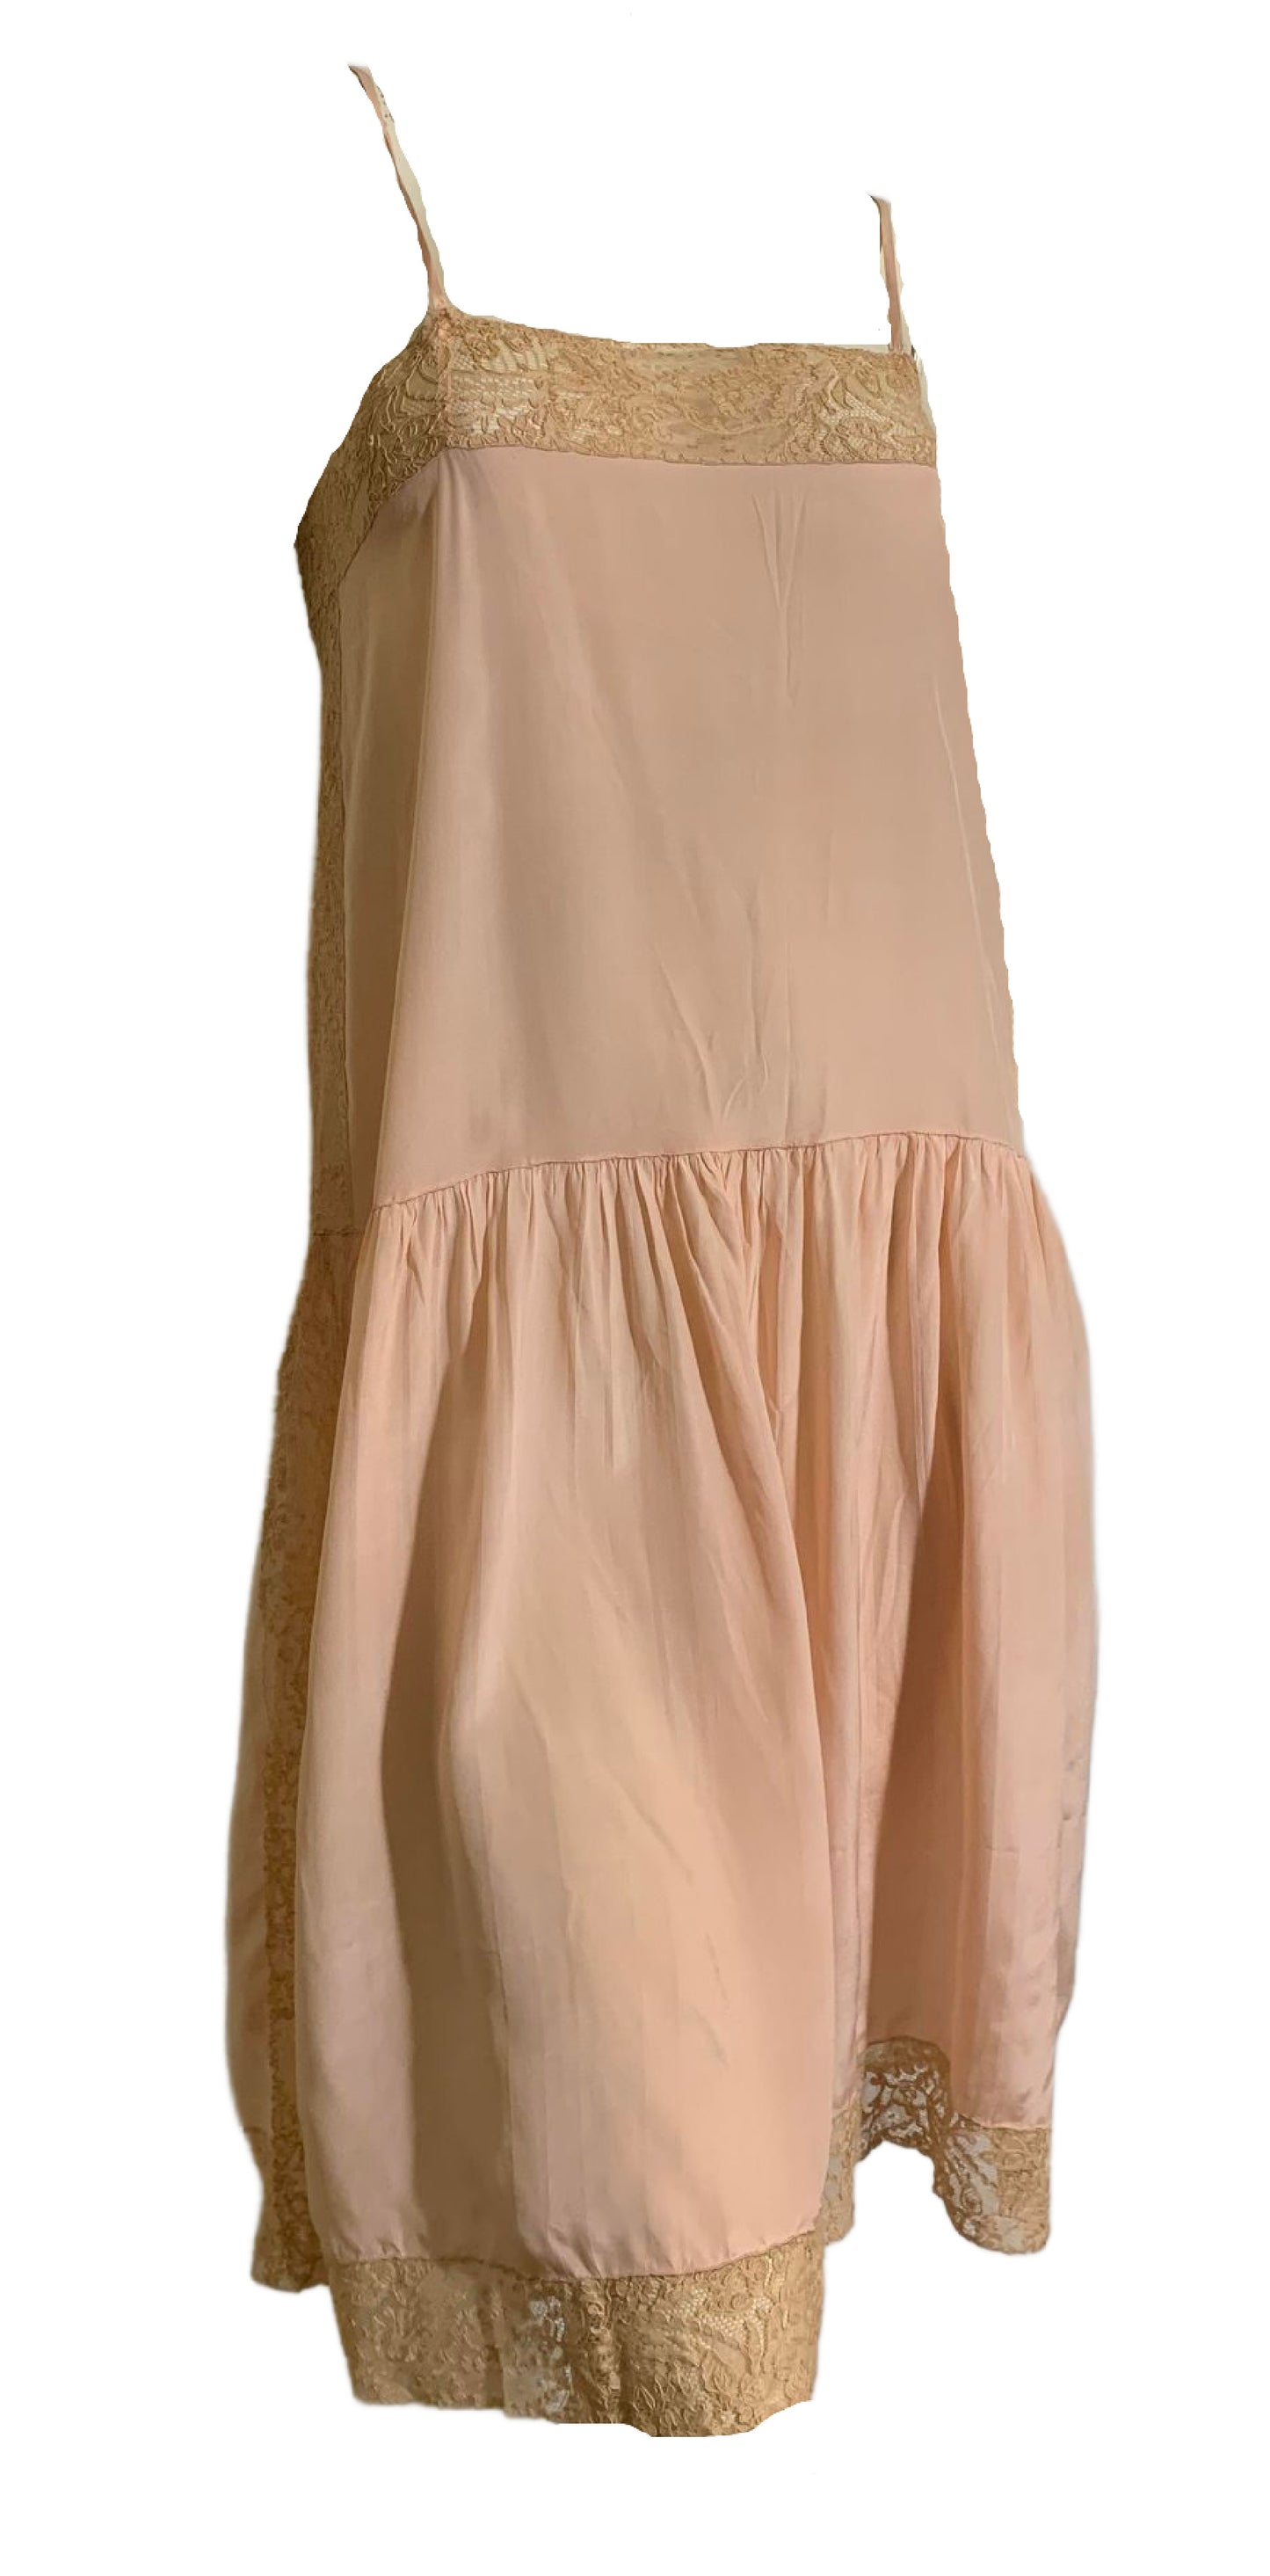 High Slit Lace Trimmed Peach Silk Full Slip circa 1920s